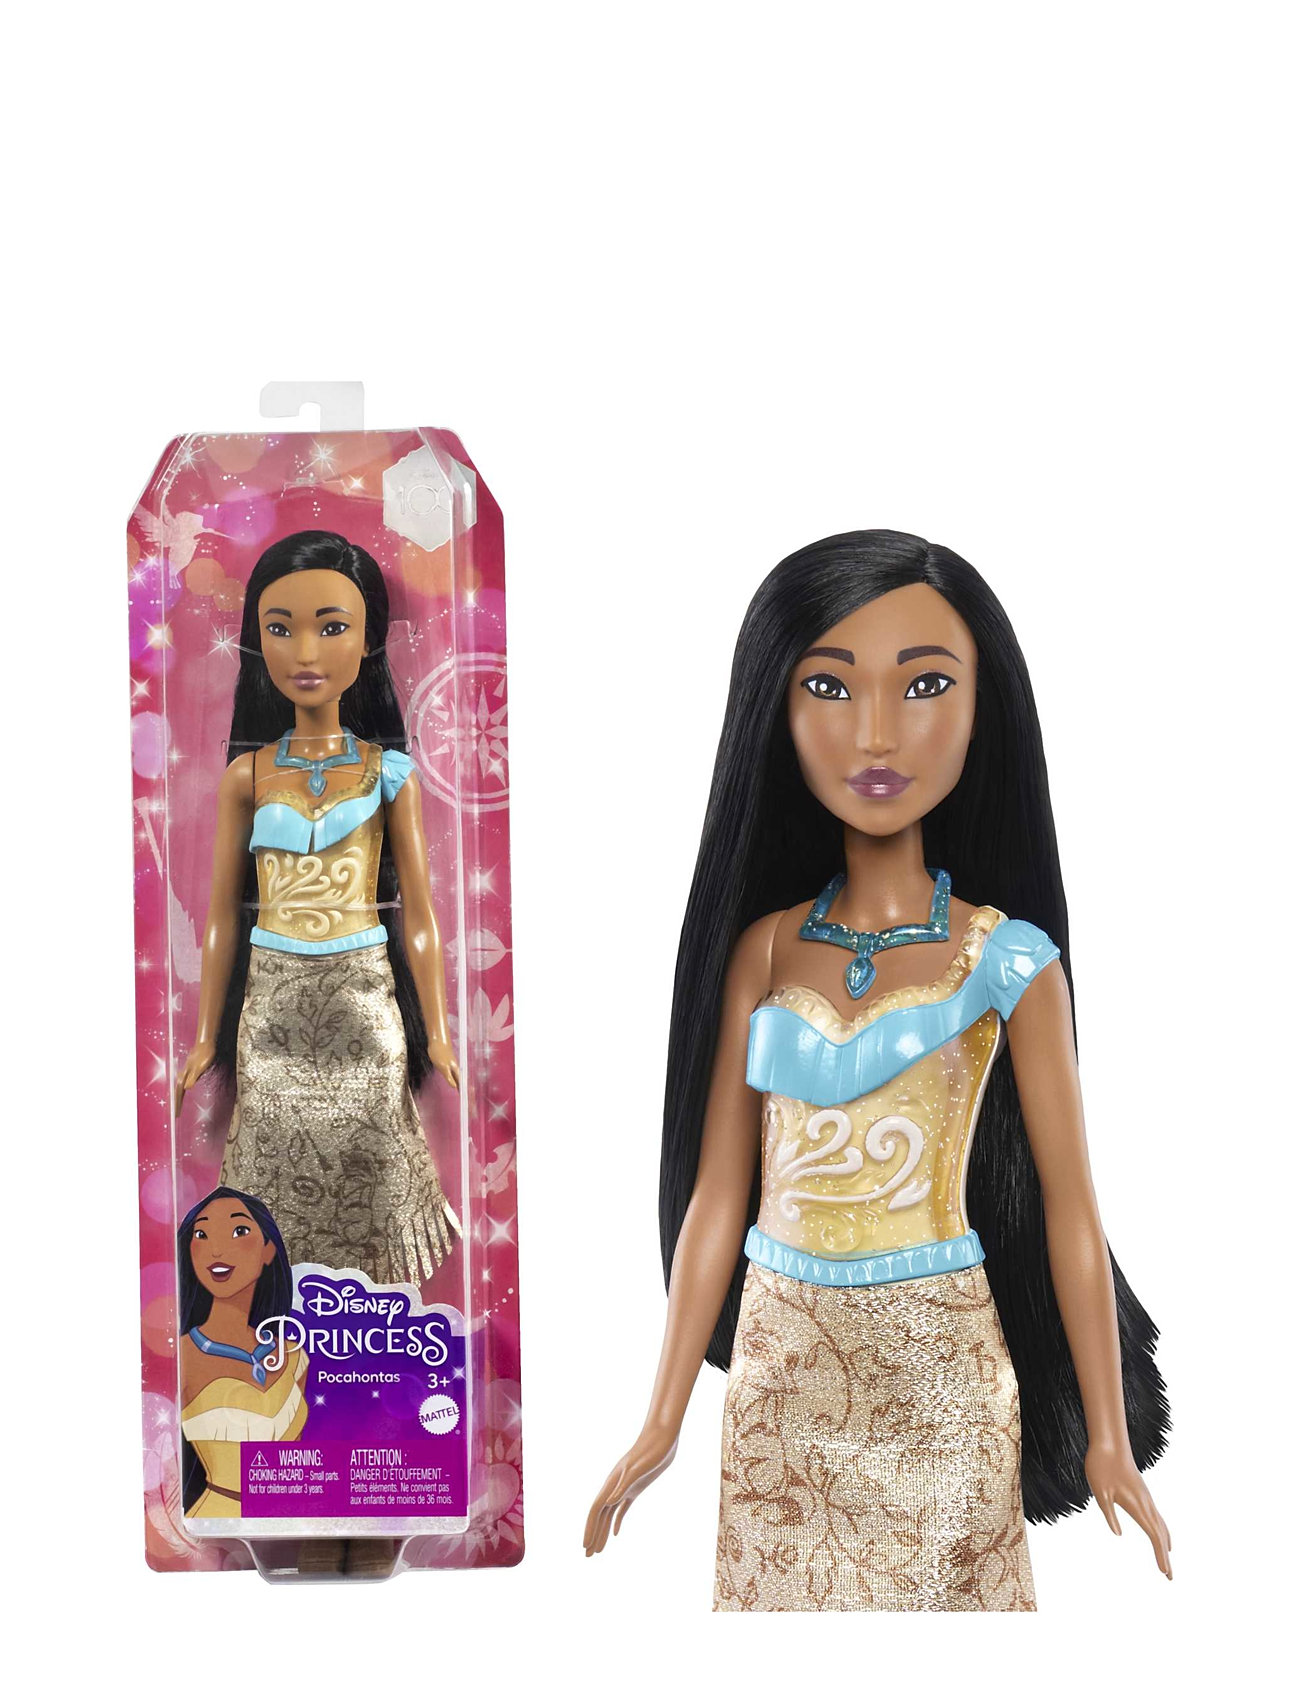 Disney Princess Pocahontas Doll Toys Dolls & Accessories Dolls Multi/patterned Disney Princess